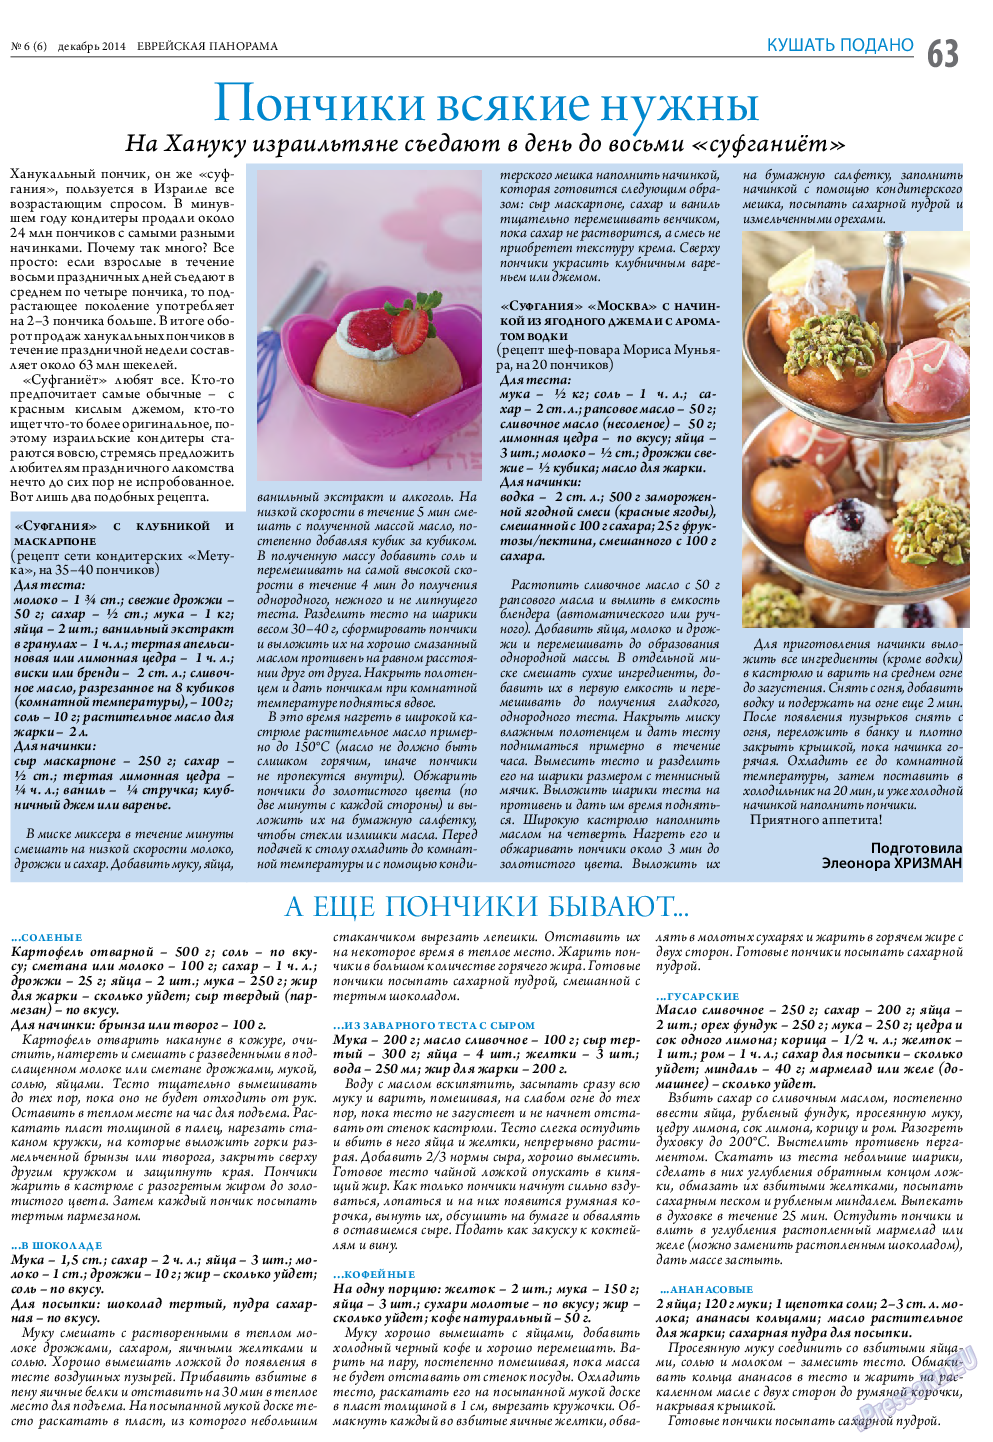 Еврейская панорама, газета. 2014 №6 стр.63